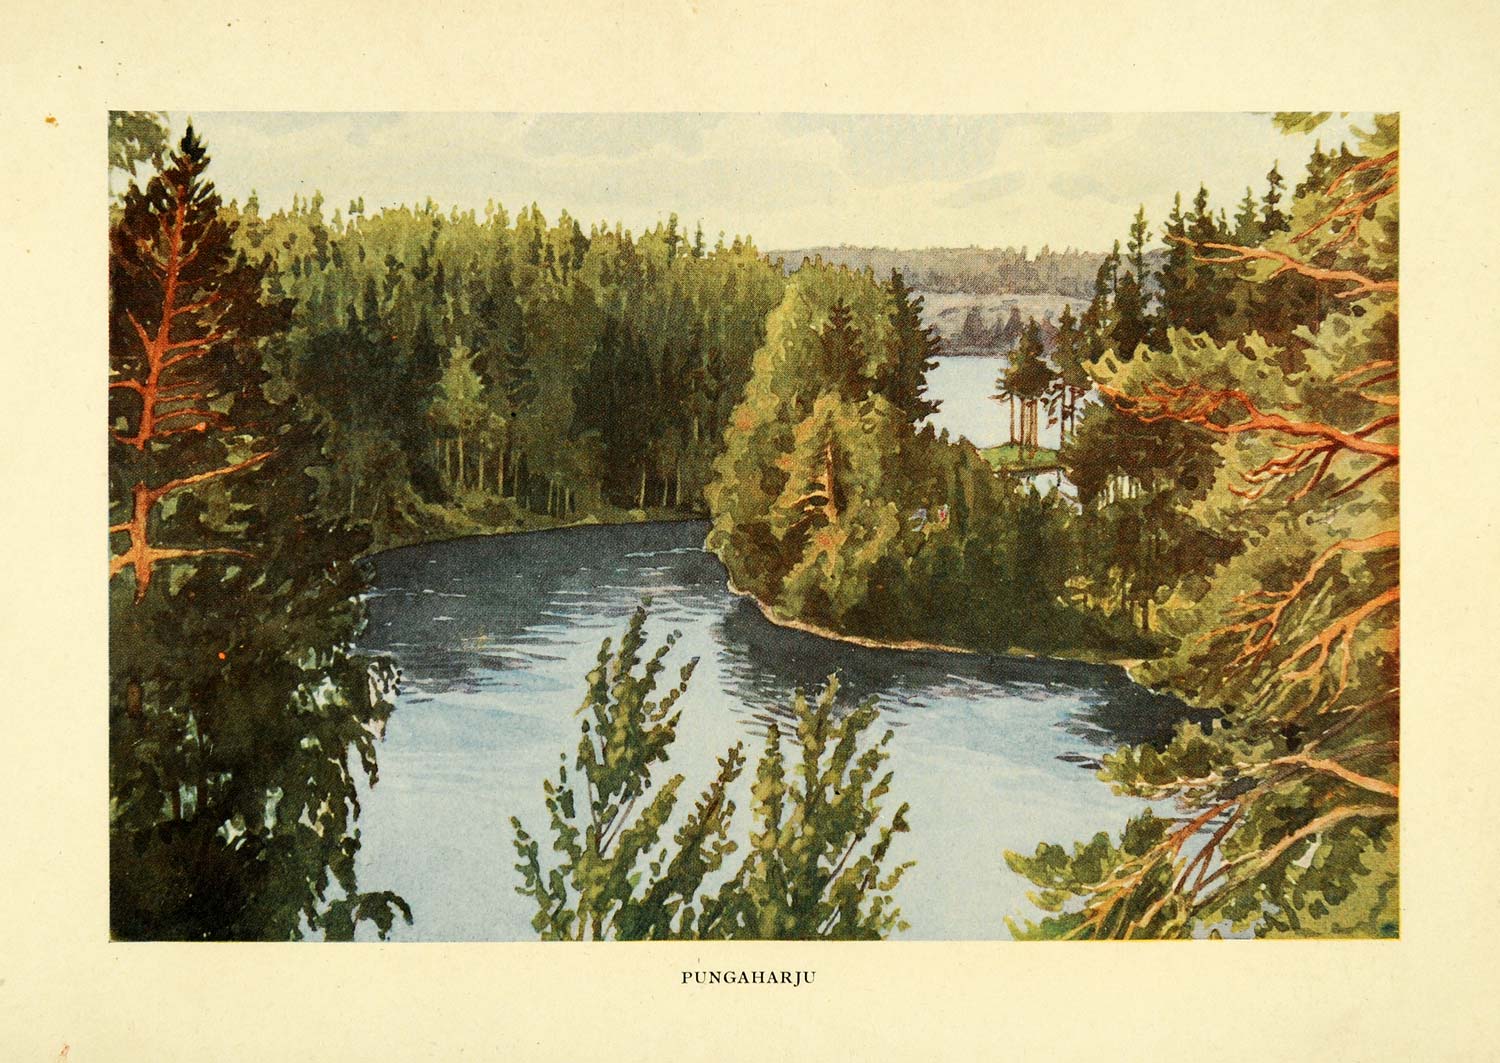 1908 Print Pungaharju Finland Landscape River Pine Trees Forest Art Suomi XGE8